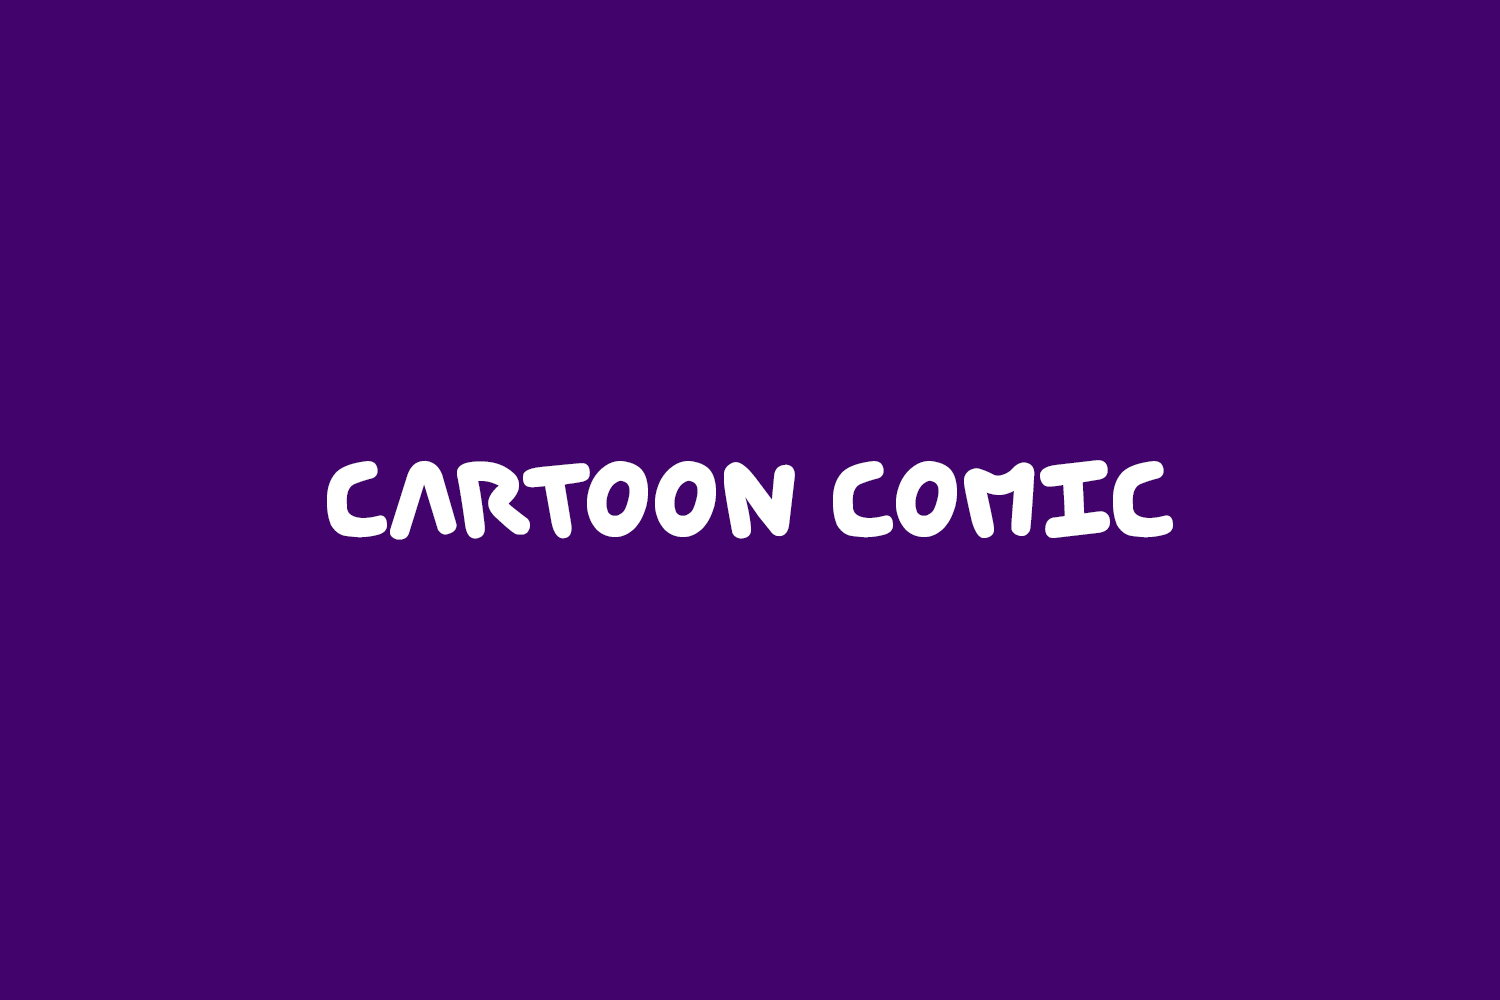 Cartoon Comic Free Font